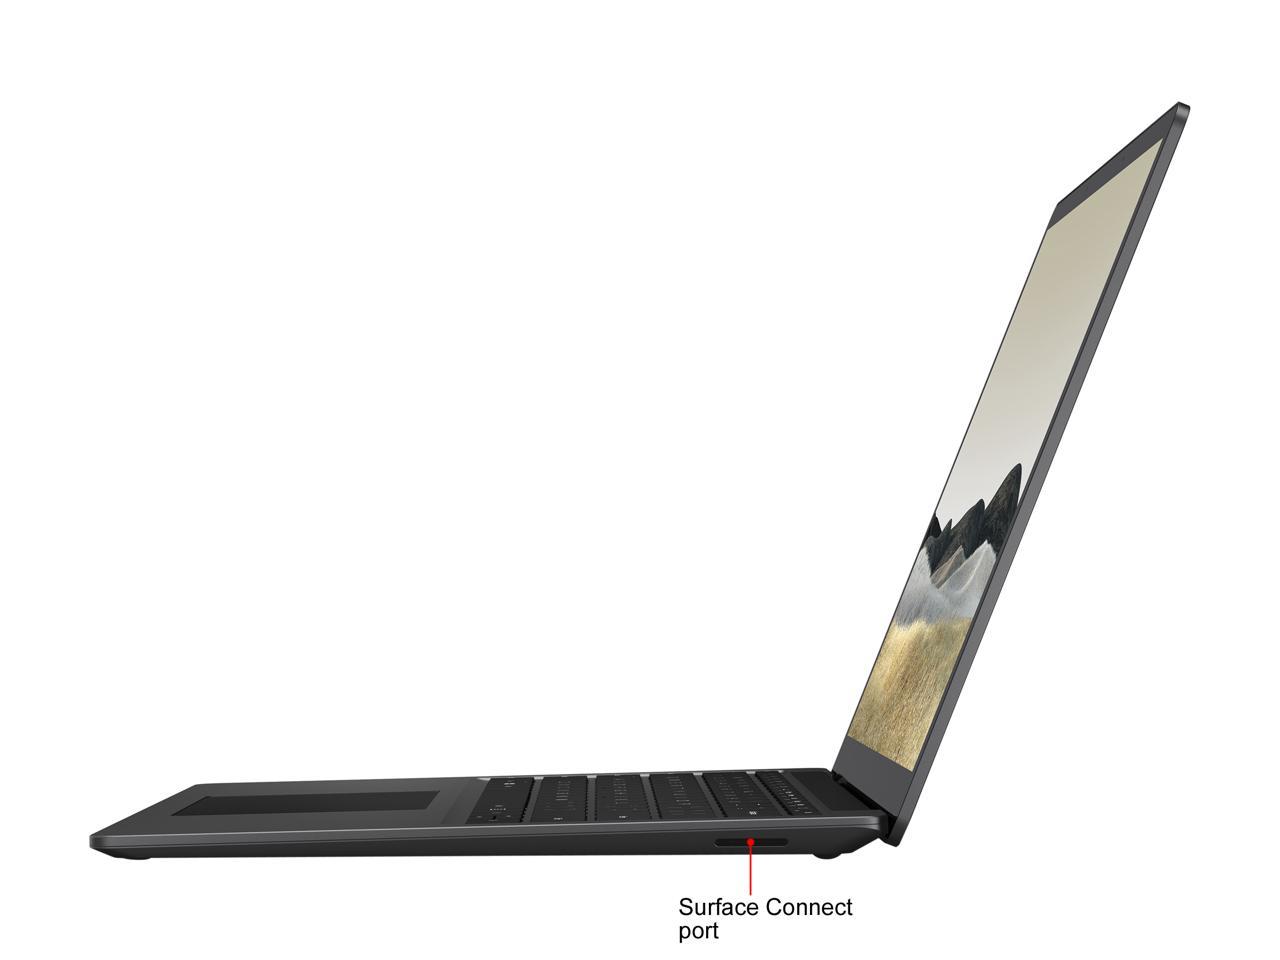 Microsoft Surface Laptop 3 - 13.5